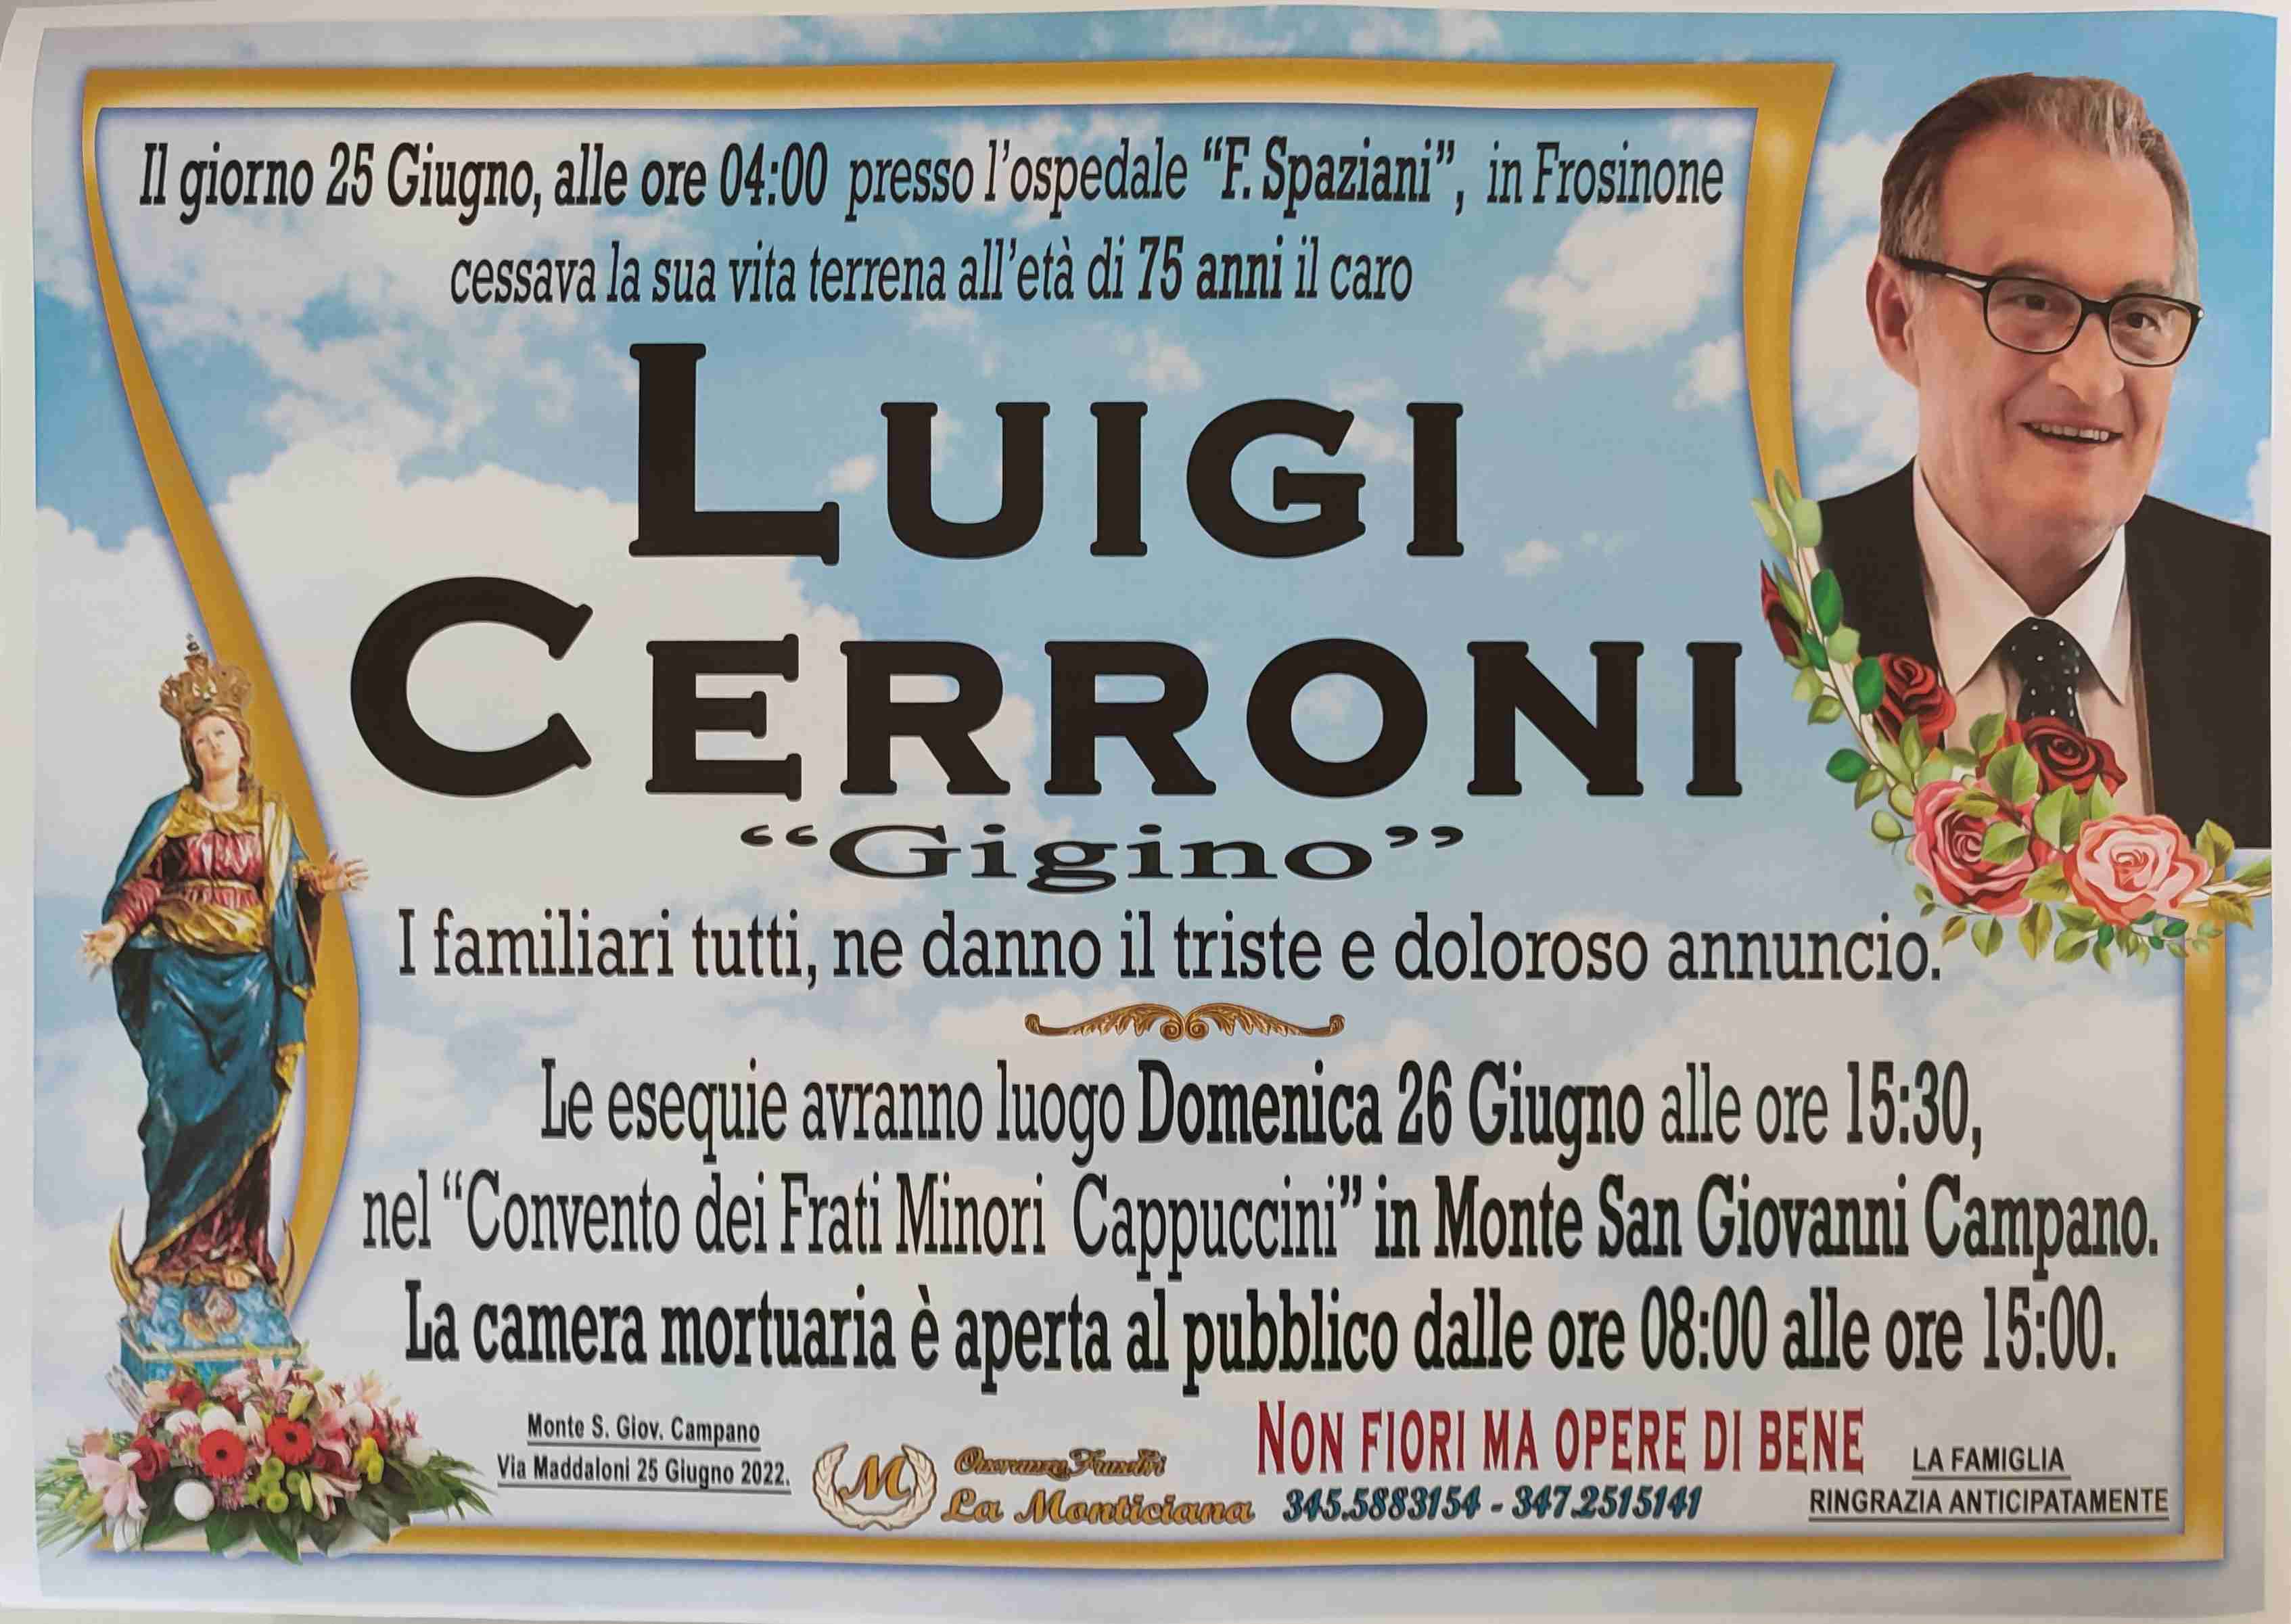 Luigi Cerroni